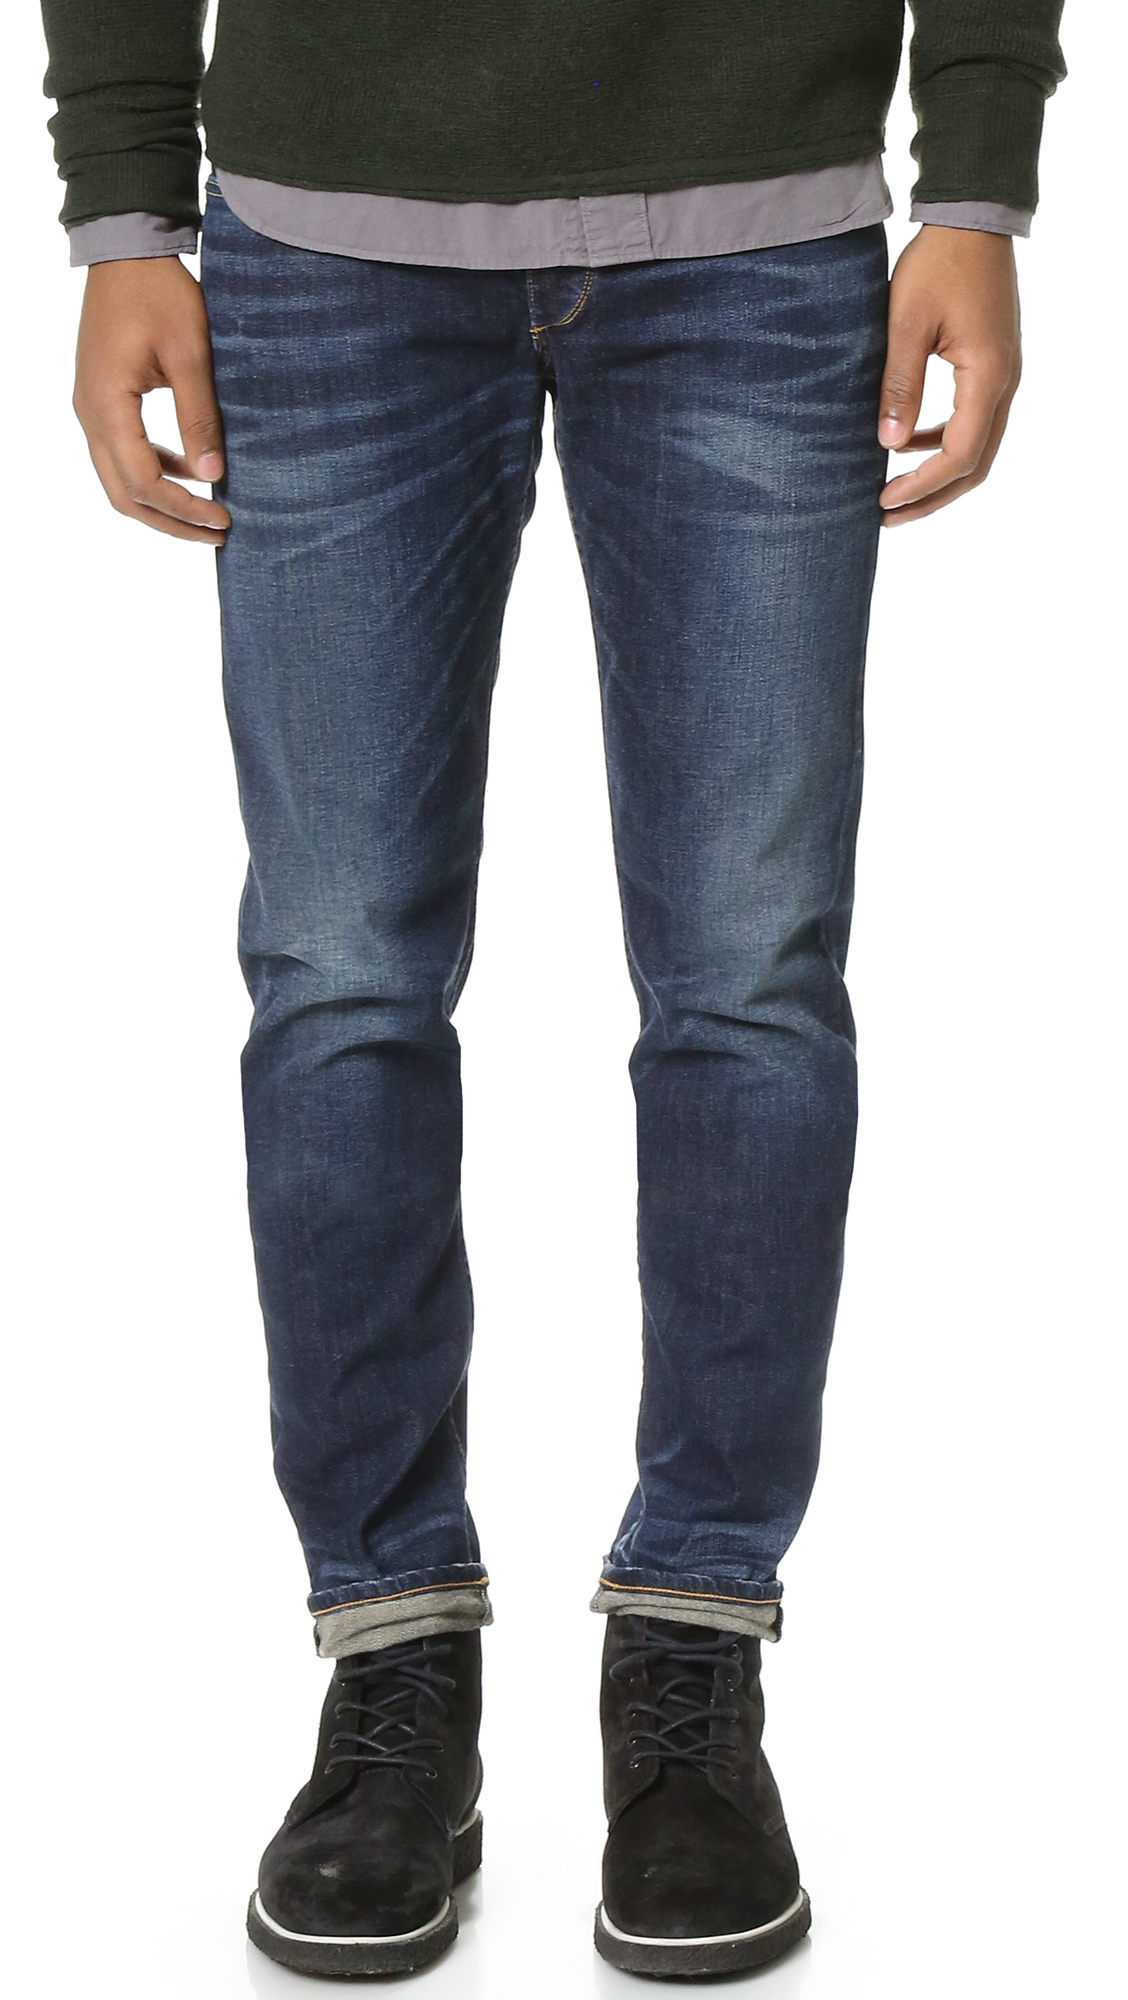 Lyst - Rag & Bone Standard Issue Fit 2 Jeans in Blue for Men